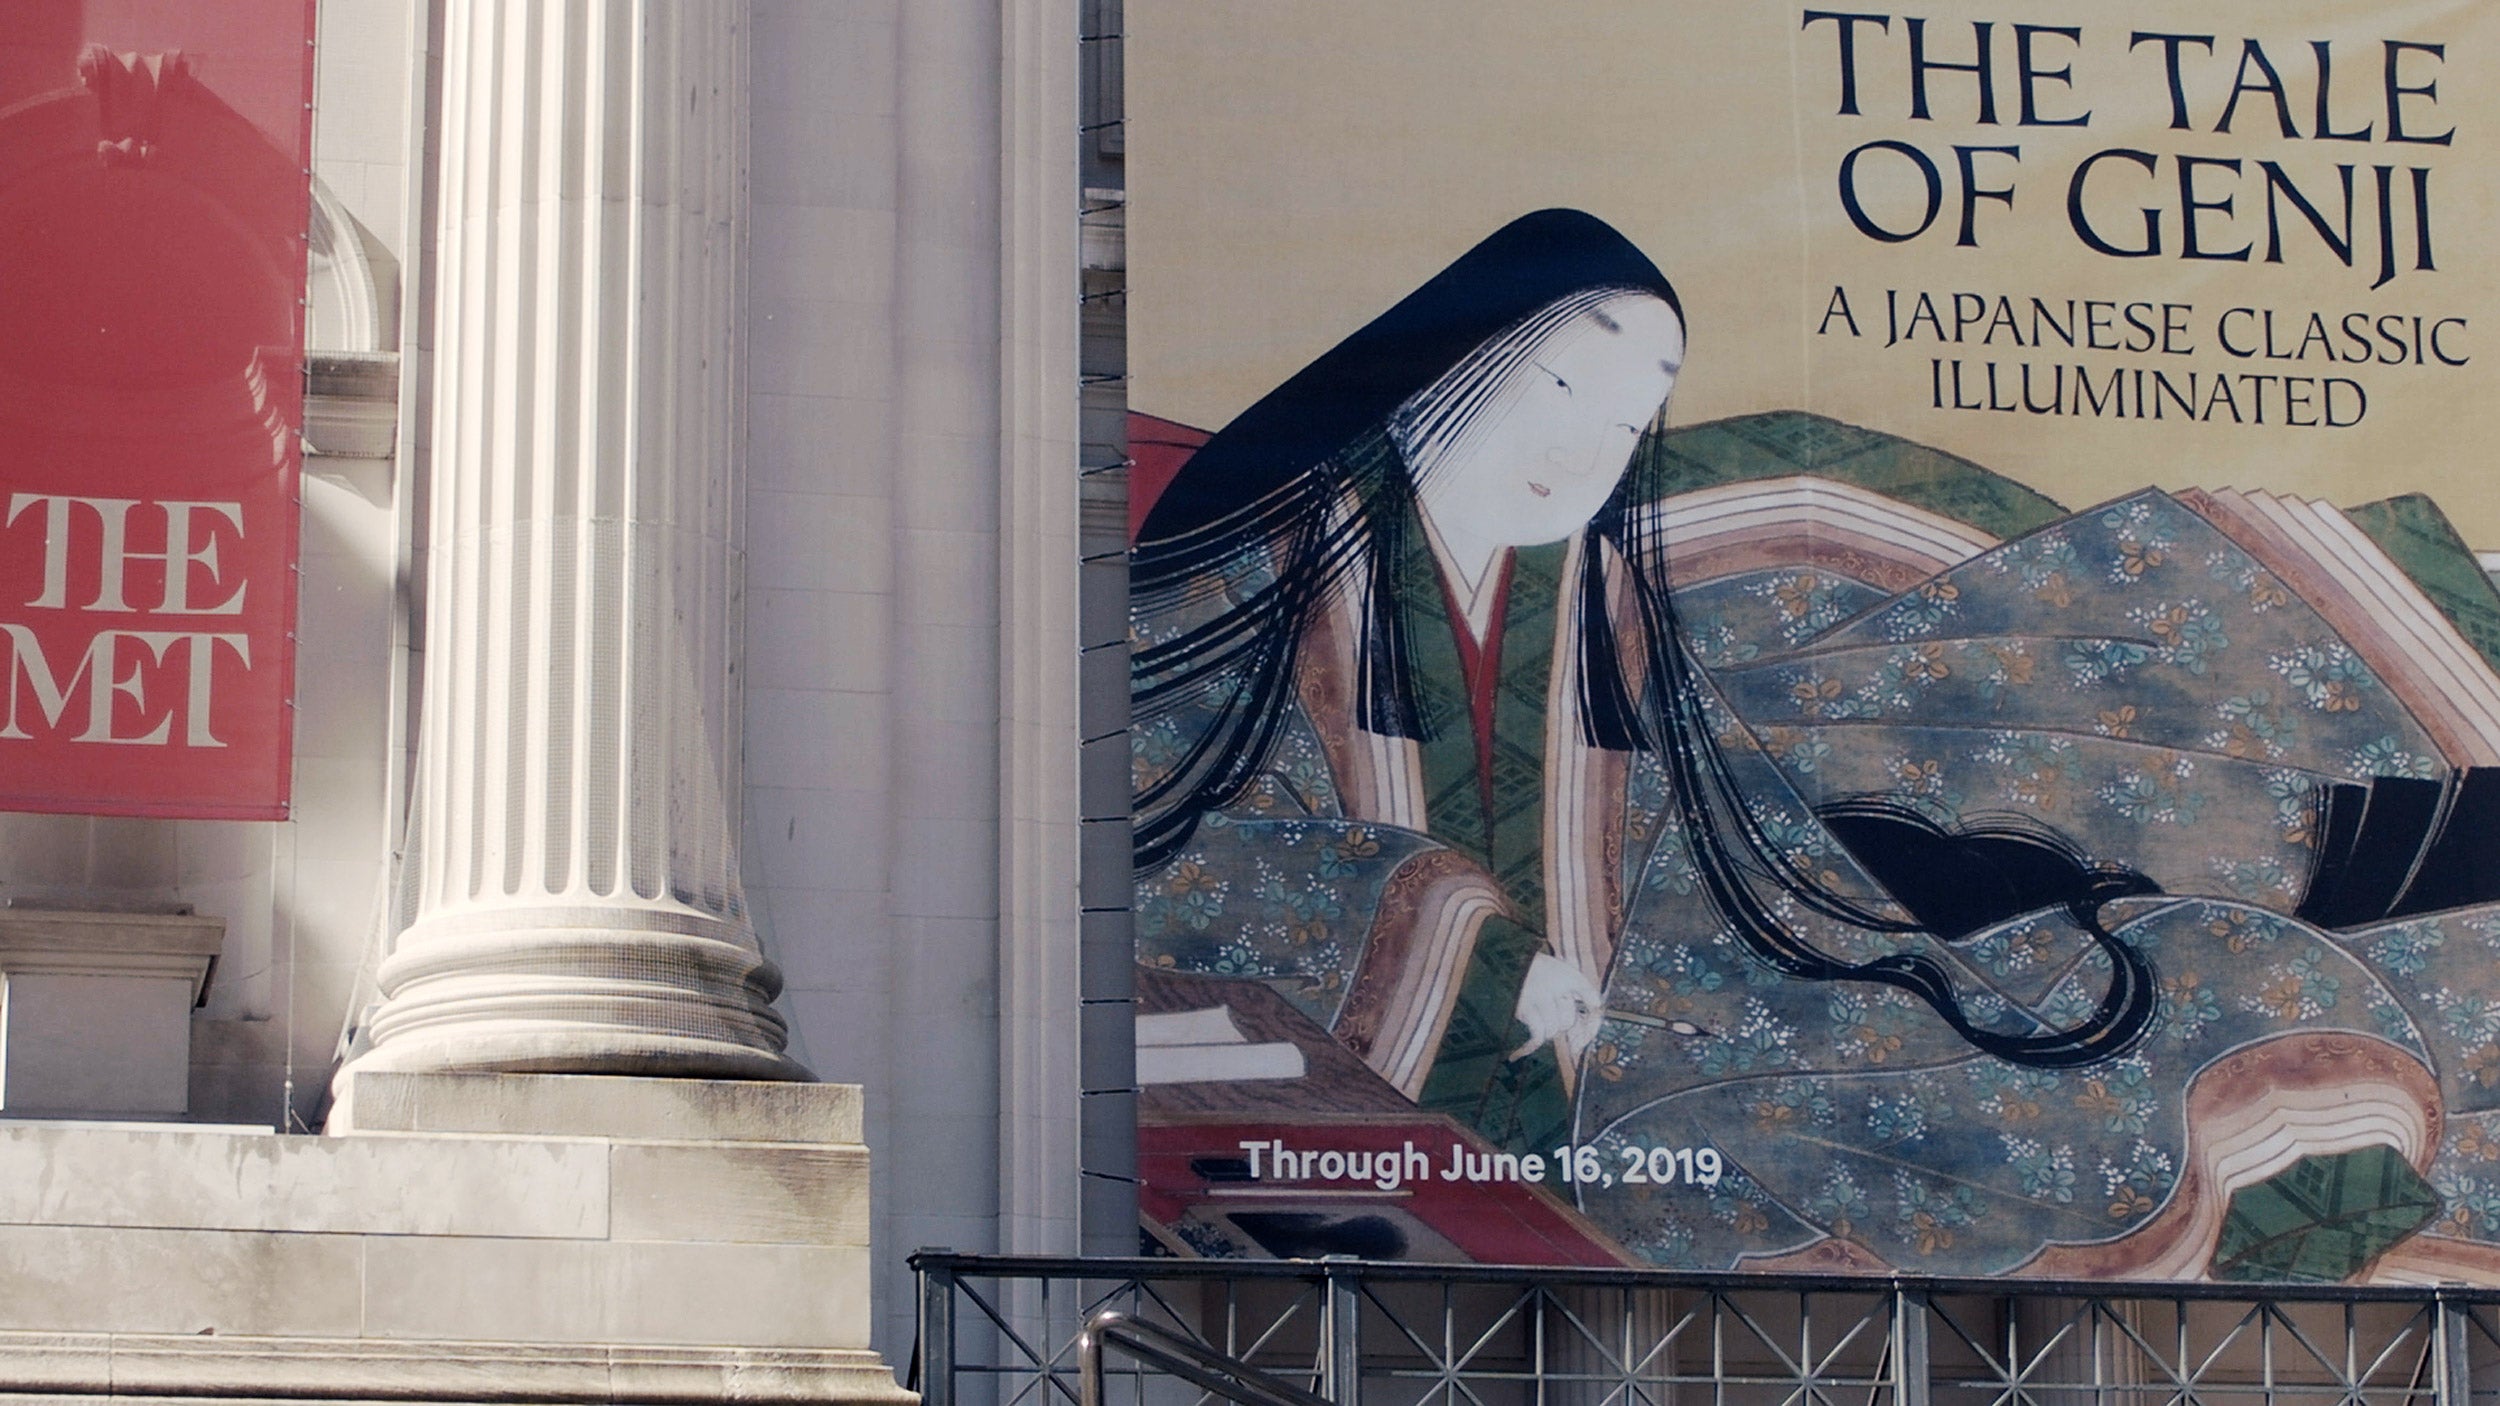 Banner advertising Gengi exhibit outside the Met